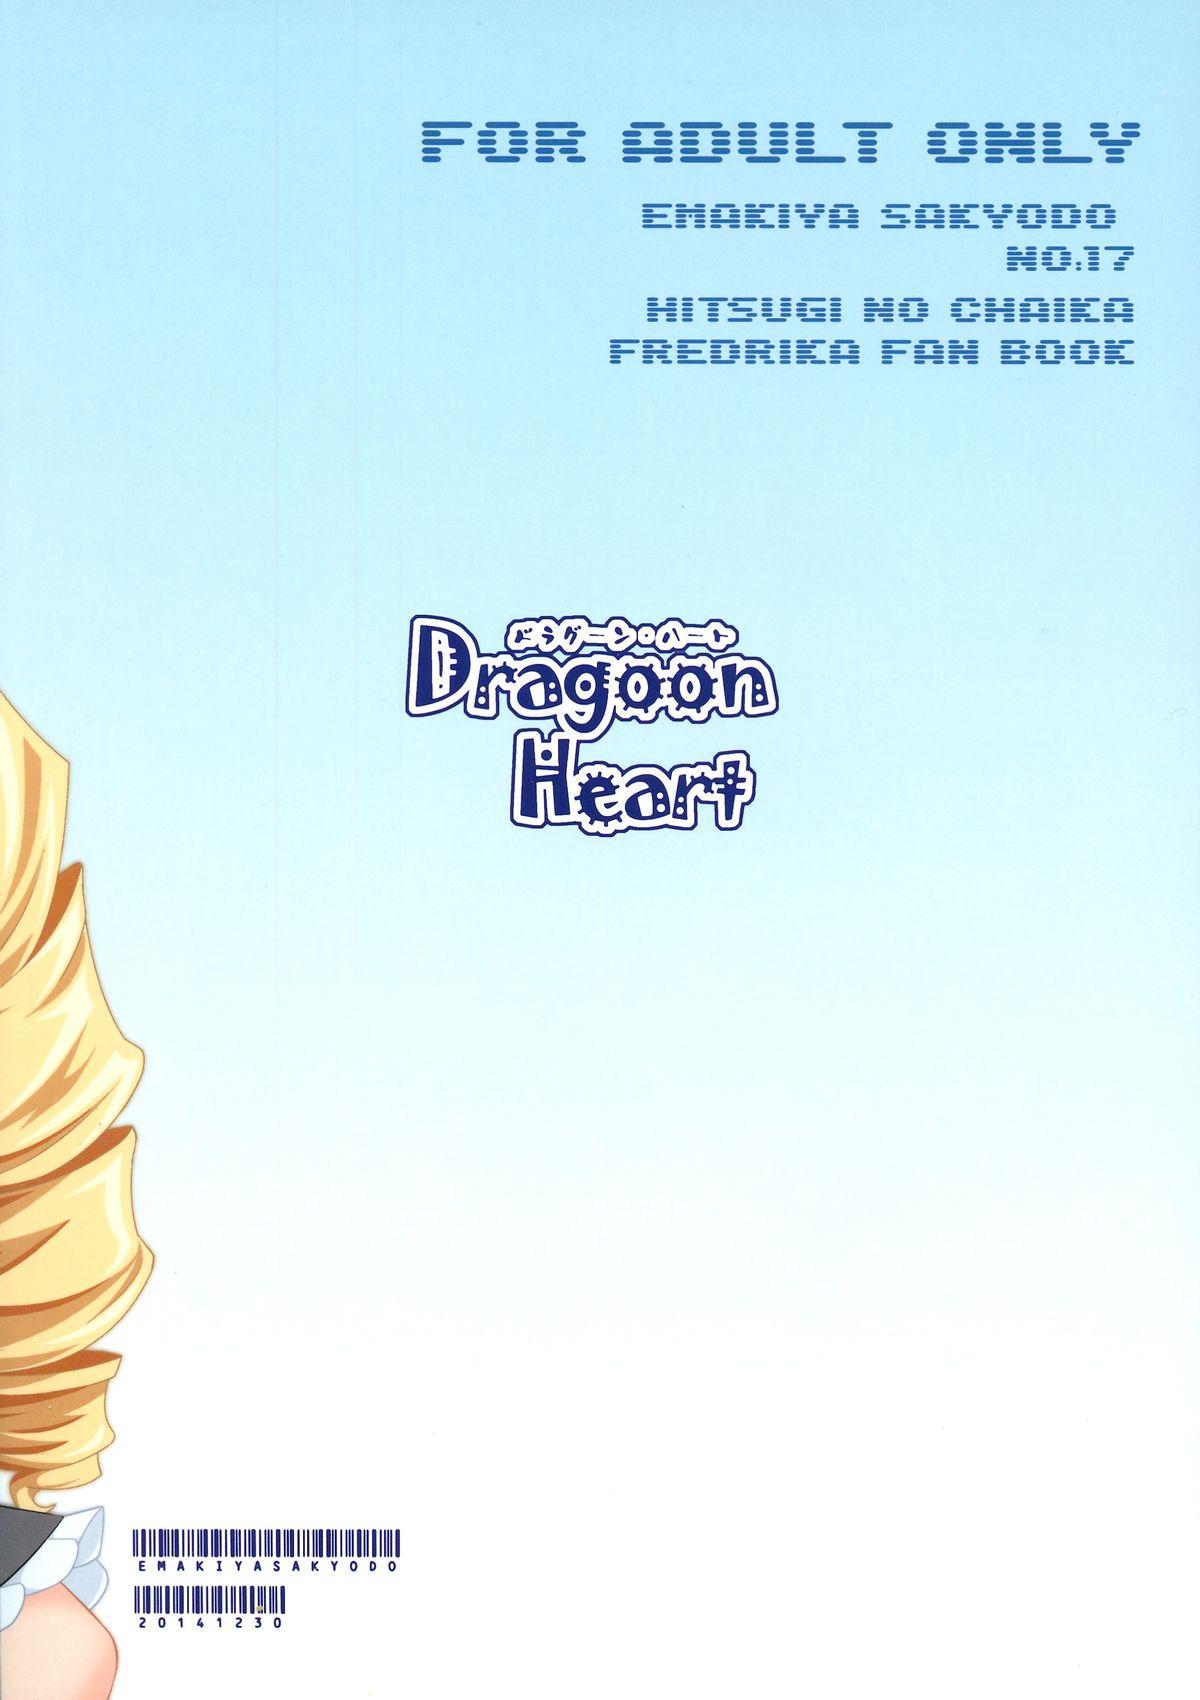 Hot Mom Dragoon Heart - Hitsugi no chaika Argentina - Page 2